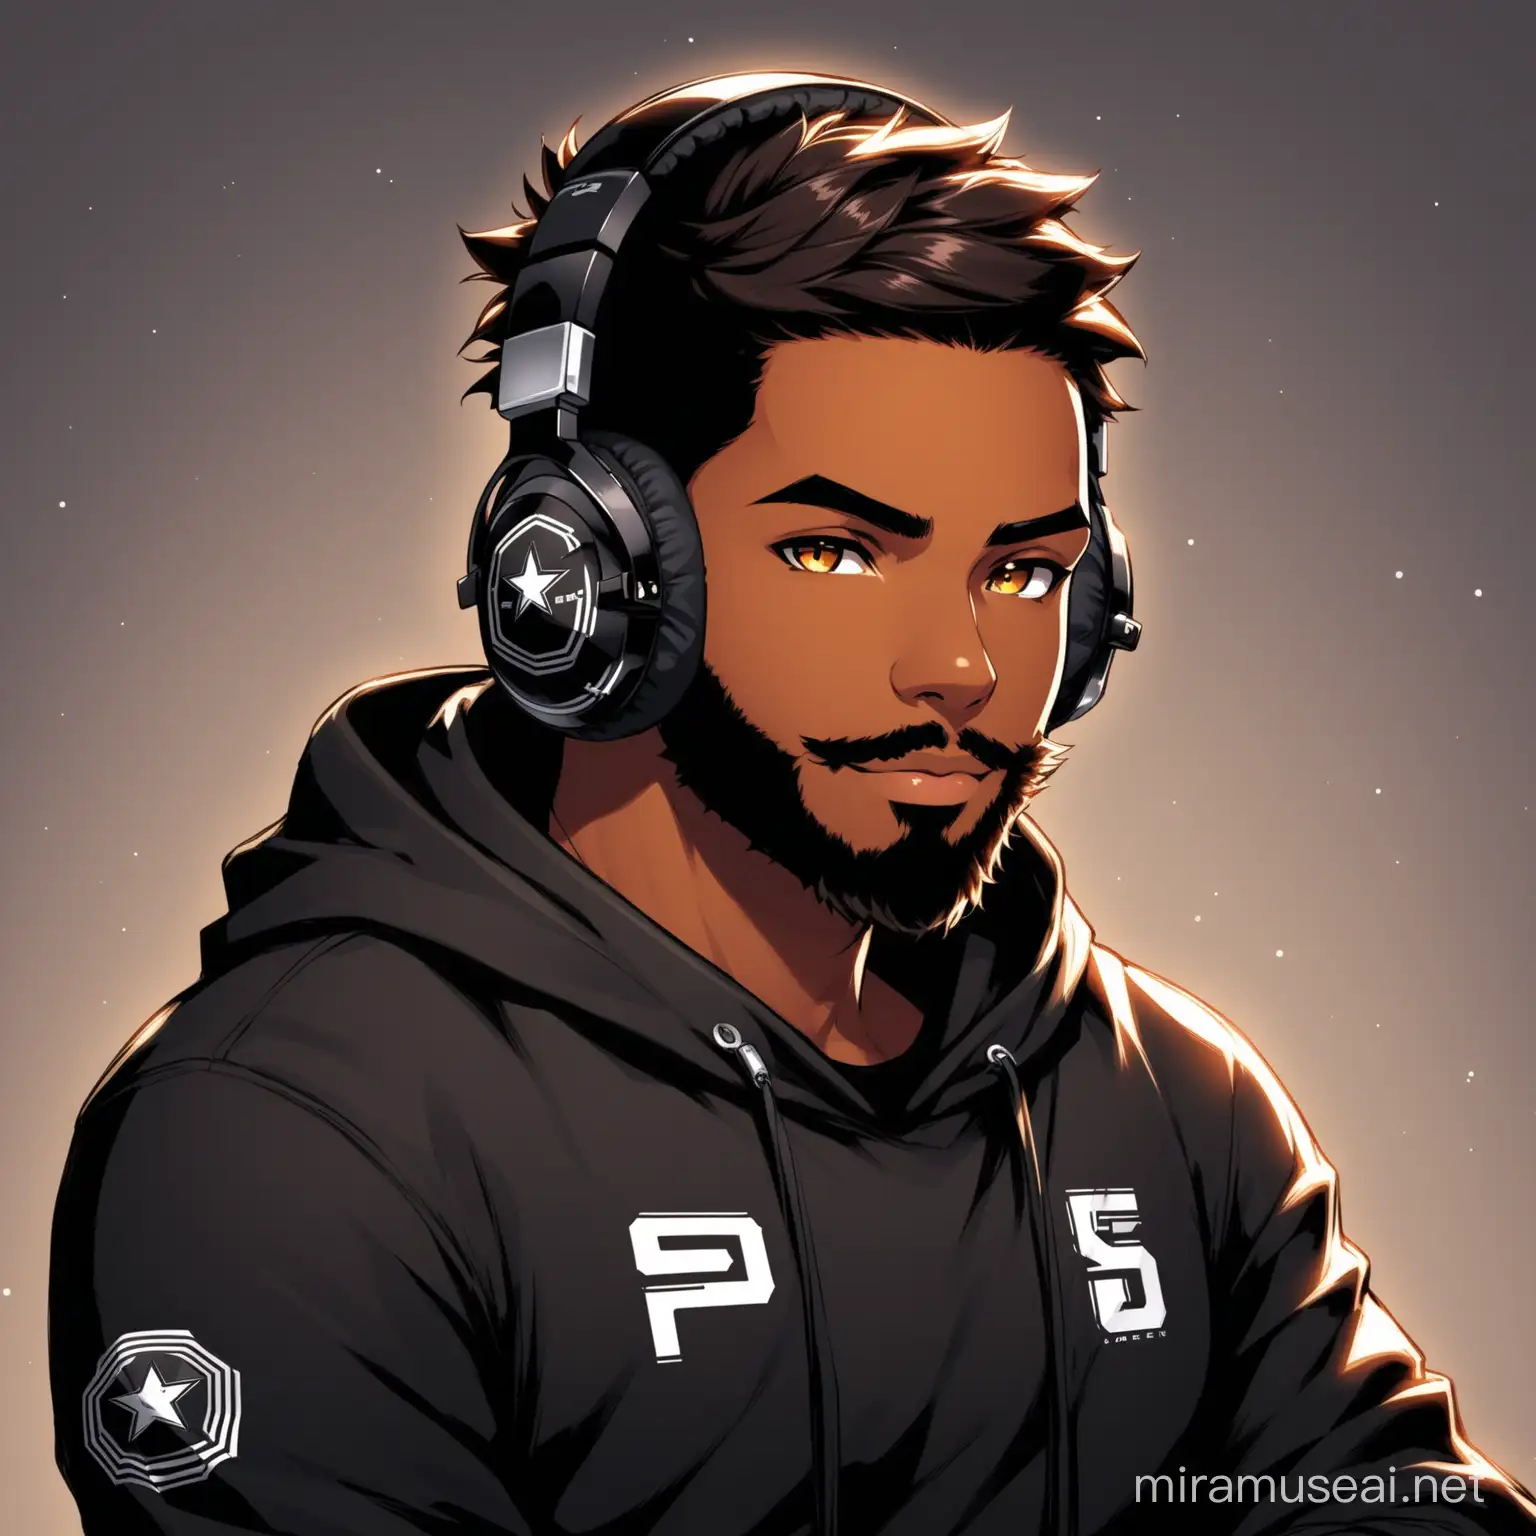  gamer profile style picture,  short beard, fps gamer, headphones, dark hair, darker skin, black jaquet